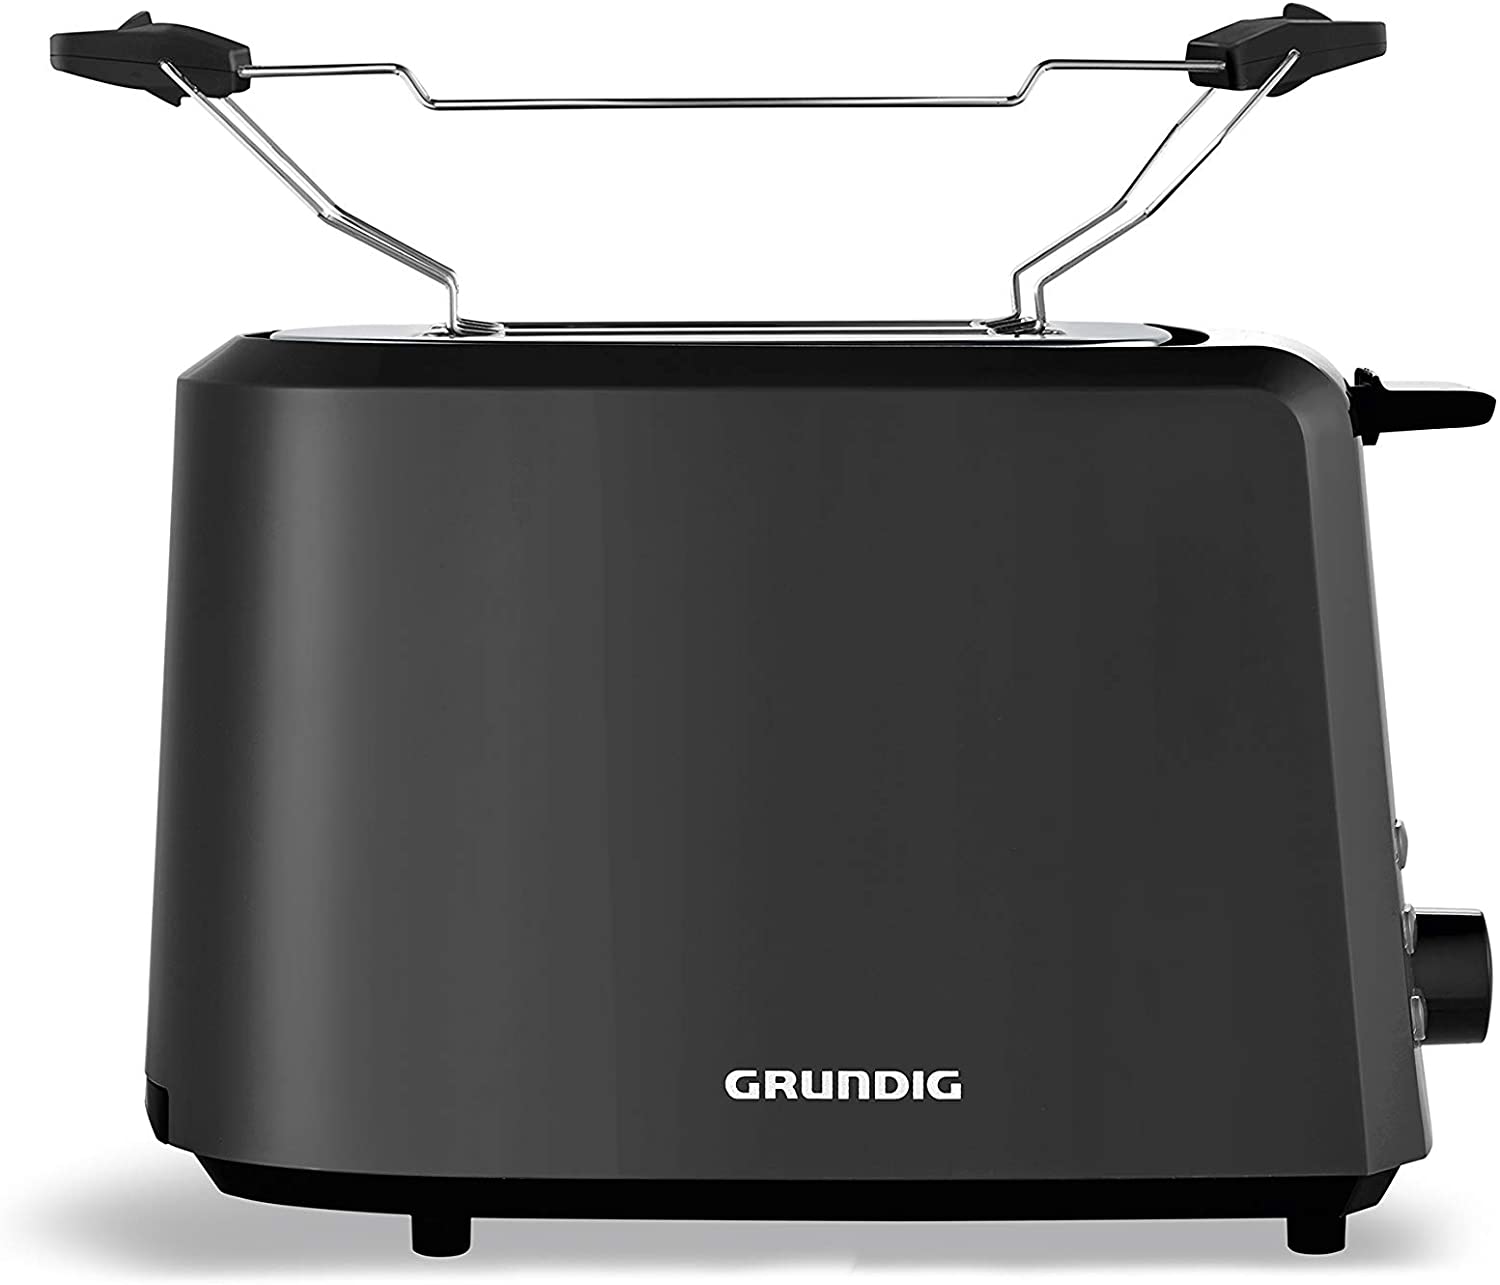 Grundig TA4620 Toaster 850 W 7 Browning Degrees Plastic Black